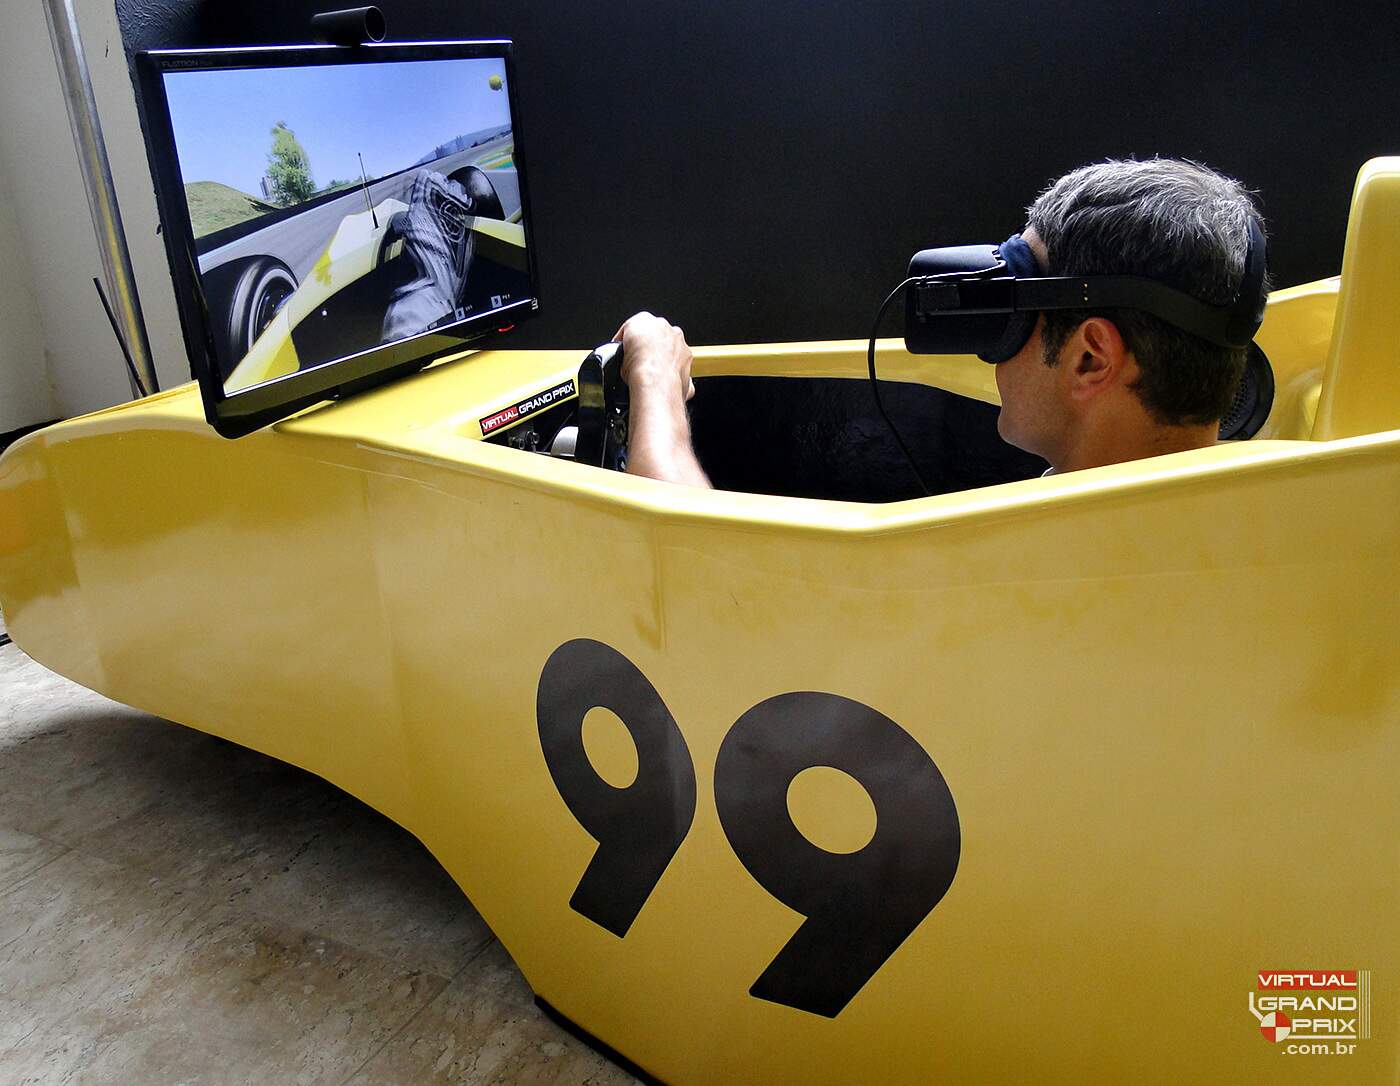 Simulador VR 99 Corp